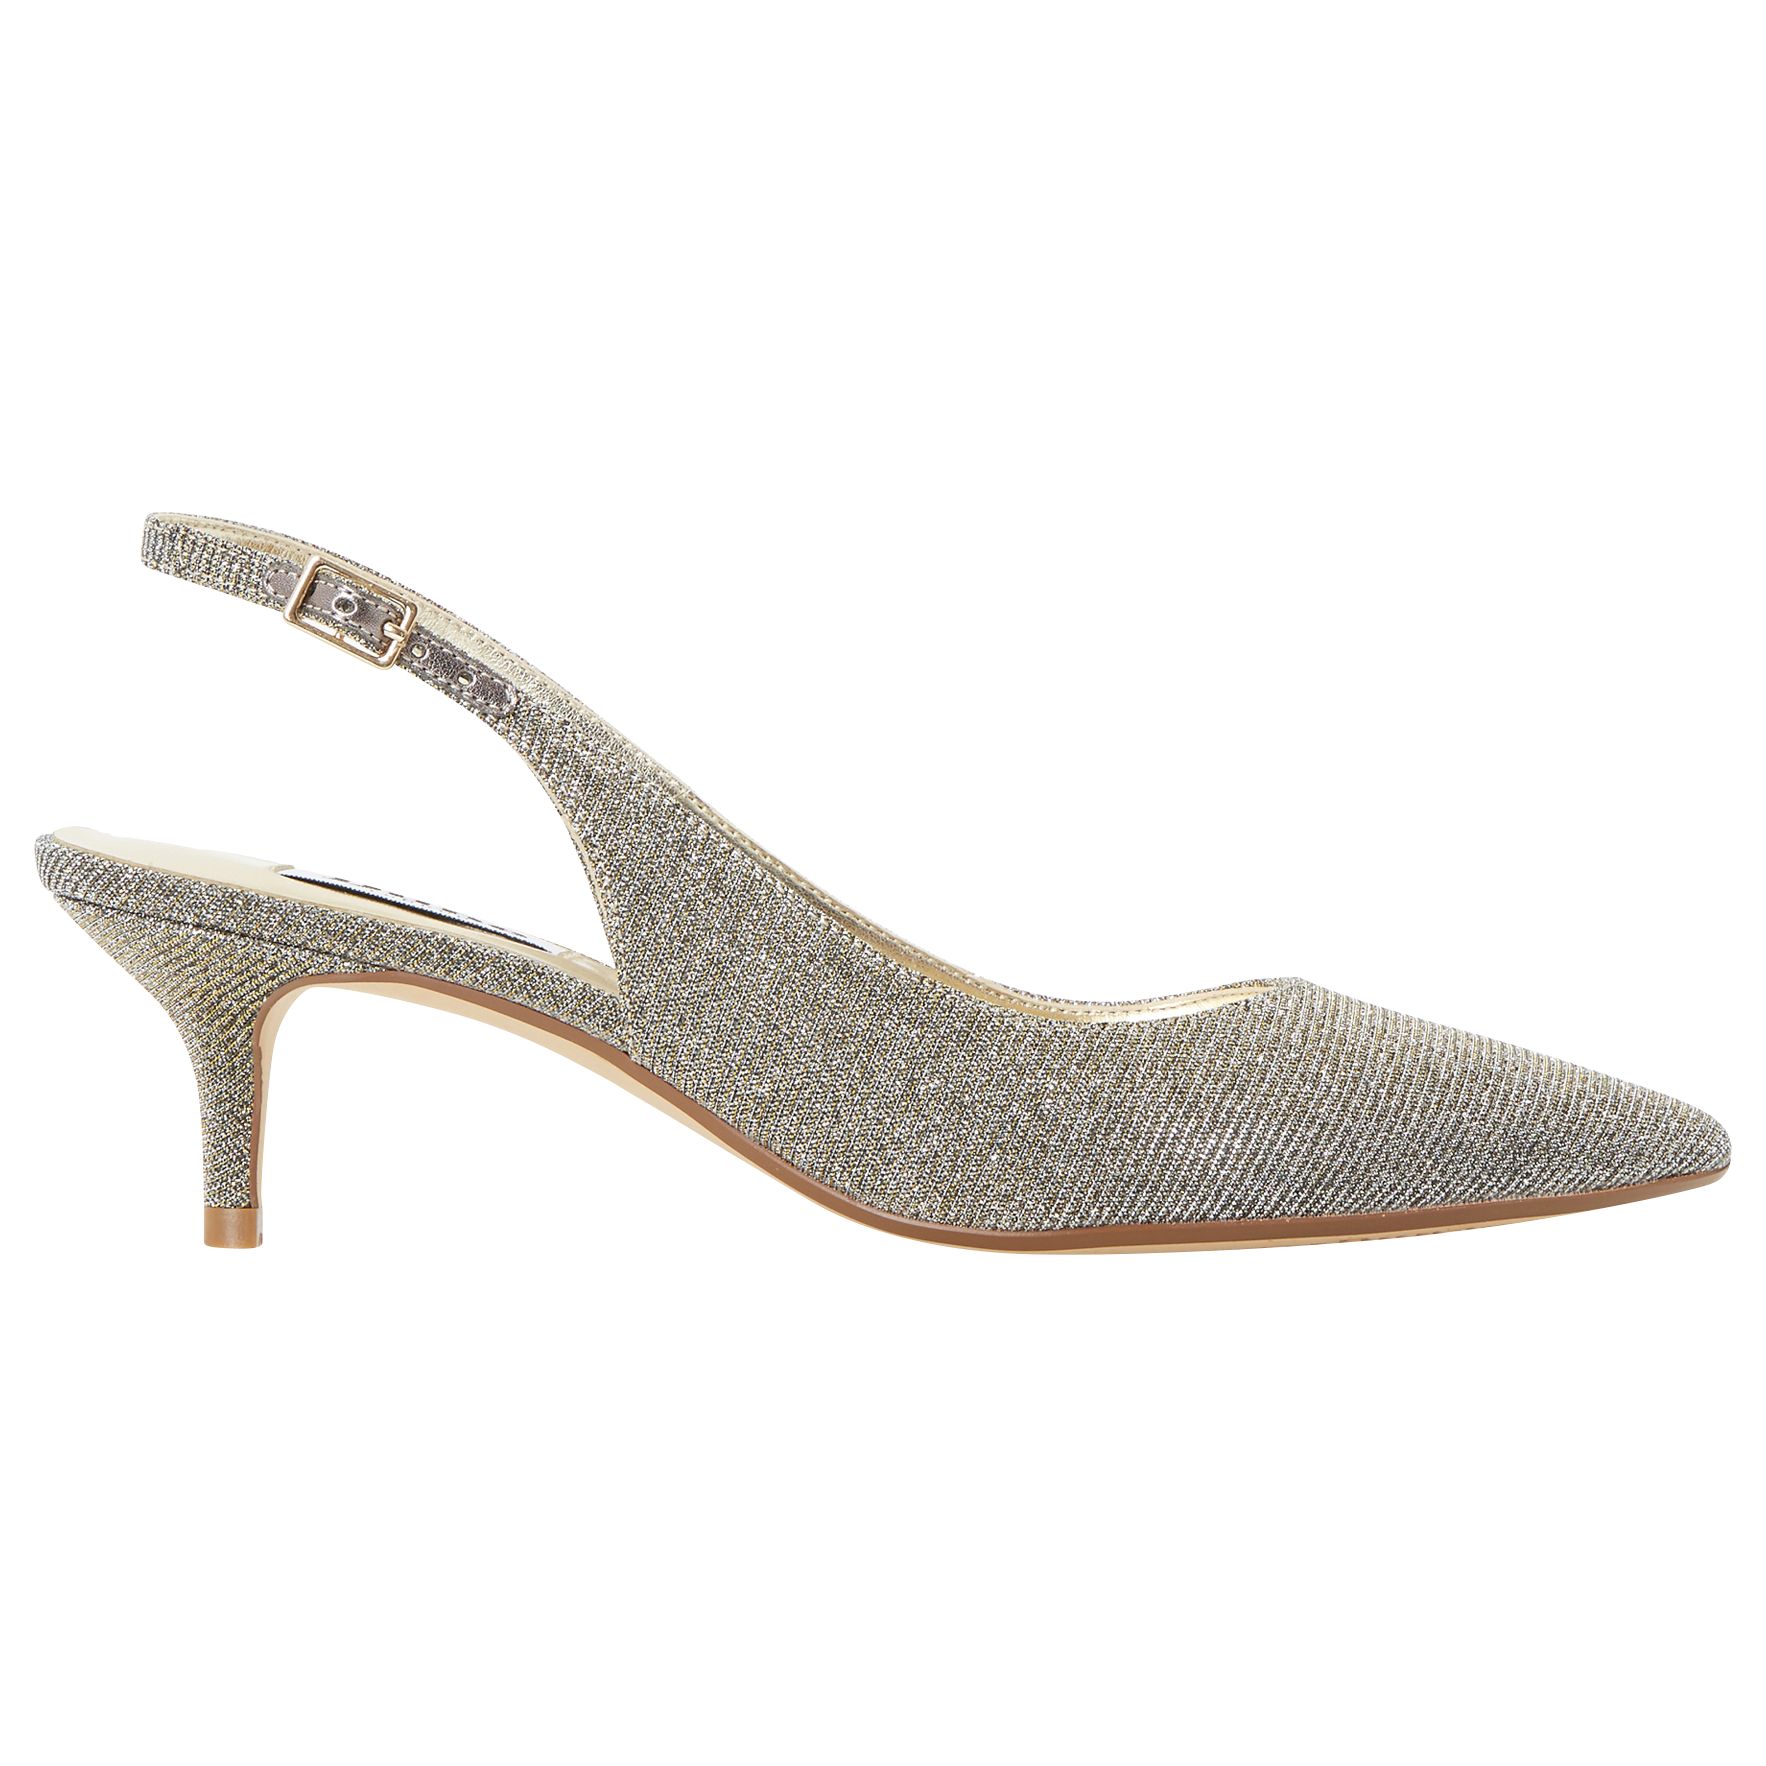 Dune Casandra Kitten Heel Slingback Court Shoes, Gold Fabric, 4